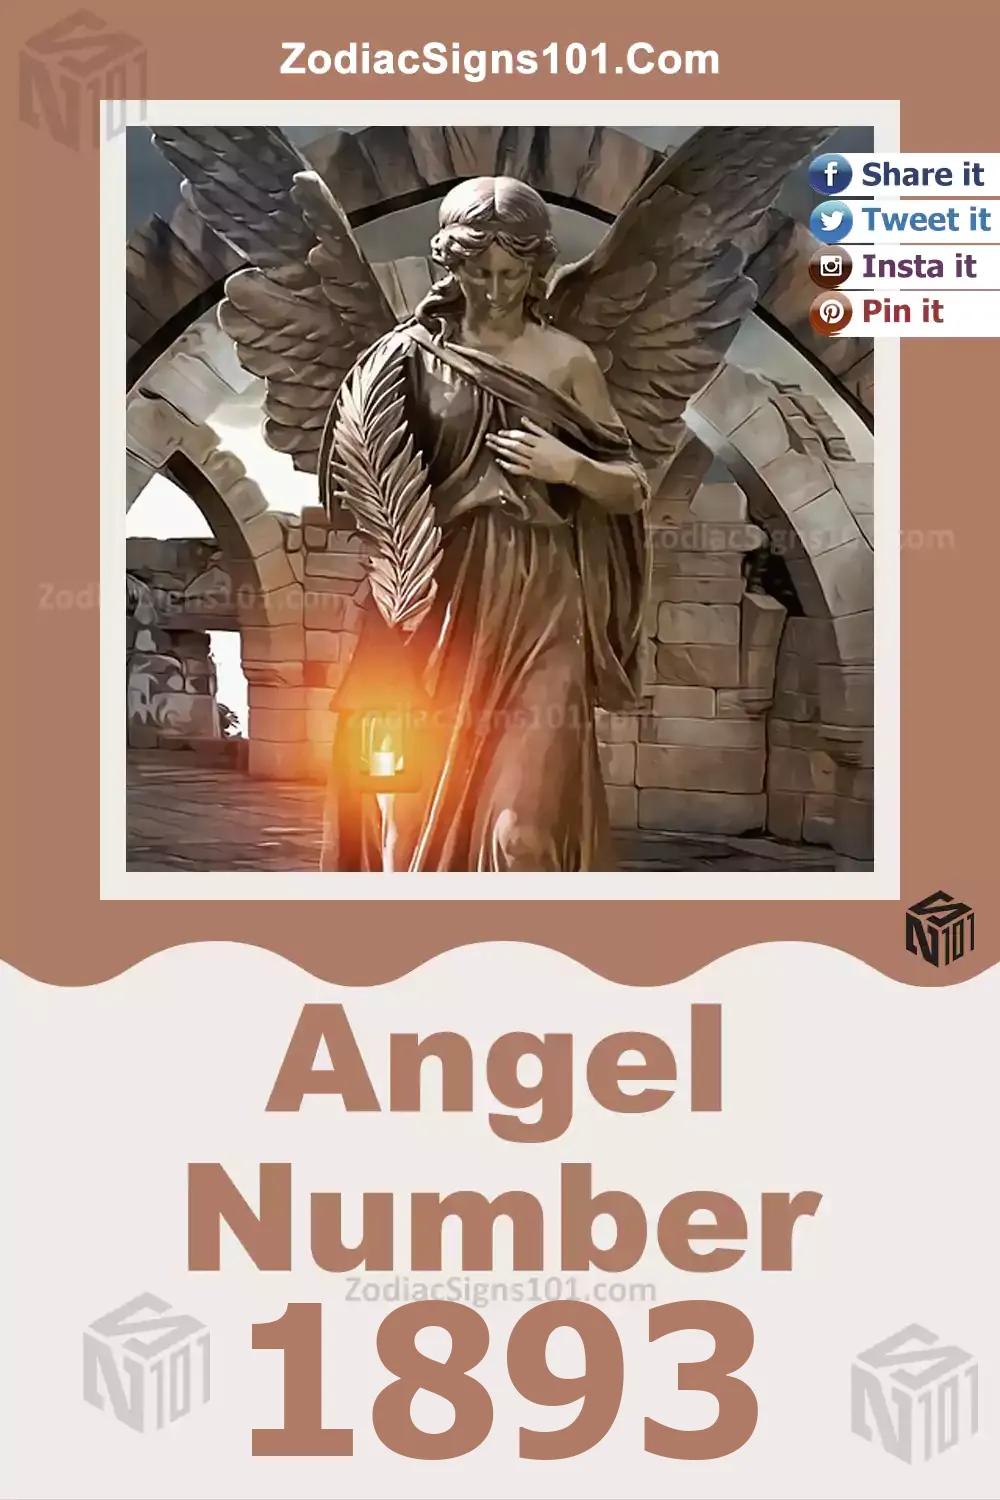 1893-Angel-Number-Meaning.jpg